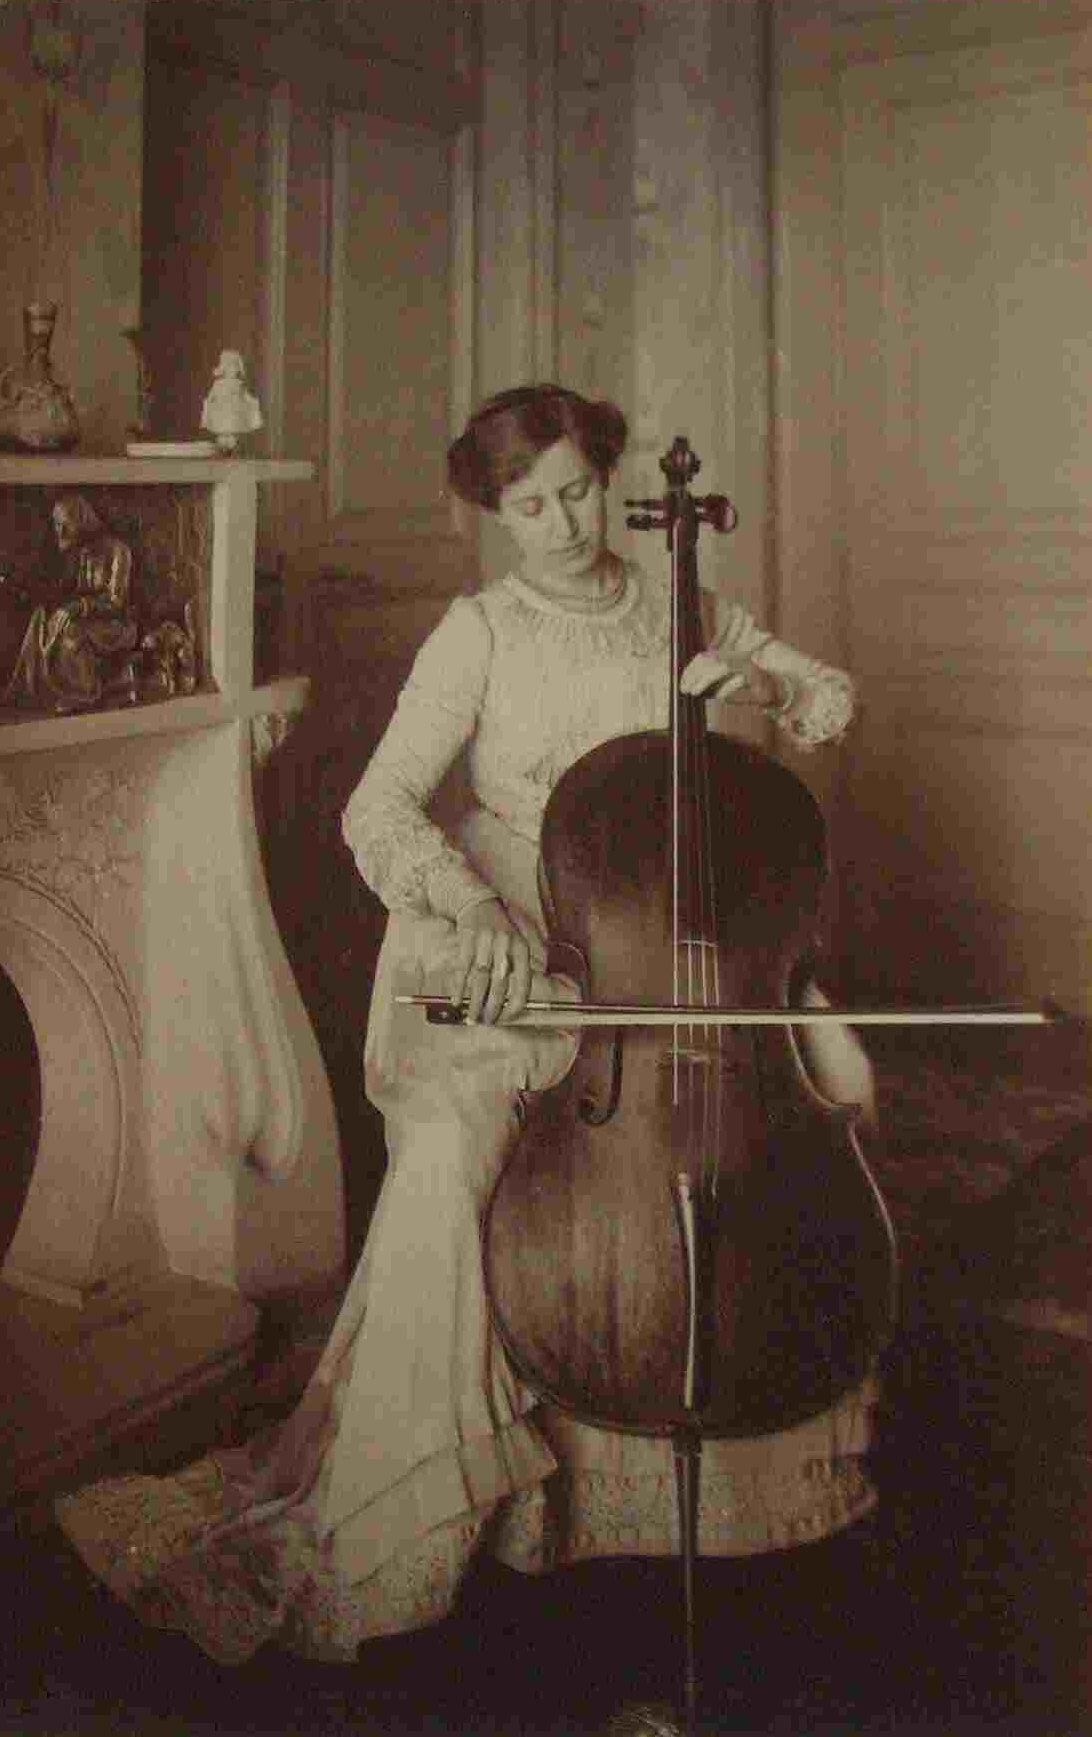 Francesca Vidal, compañera de Pau Casals, de joven, tocando el violonchelo.